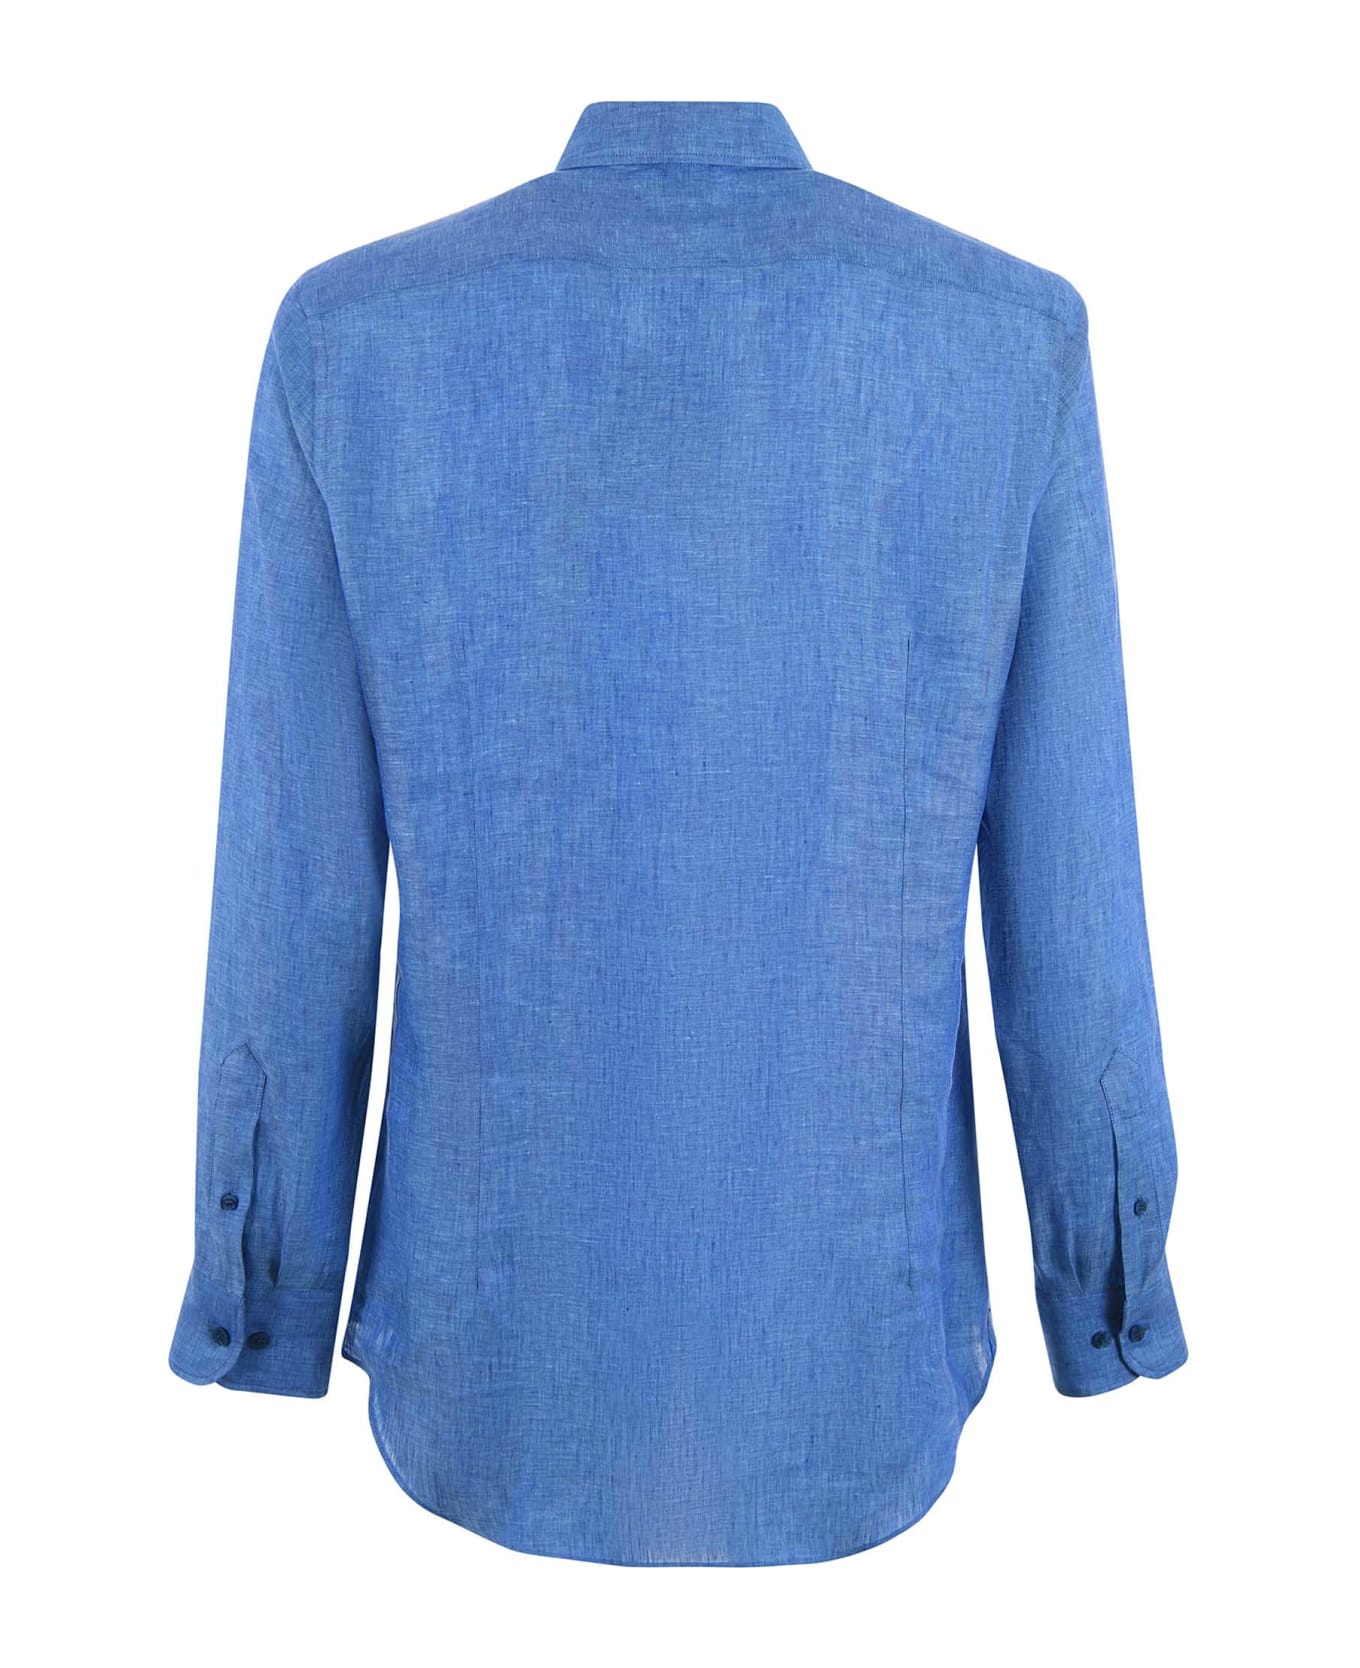 Etro Buttoned Long-sleeved Shirt - Azzurro シャツ